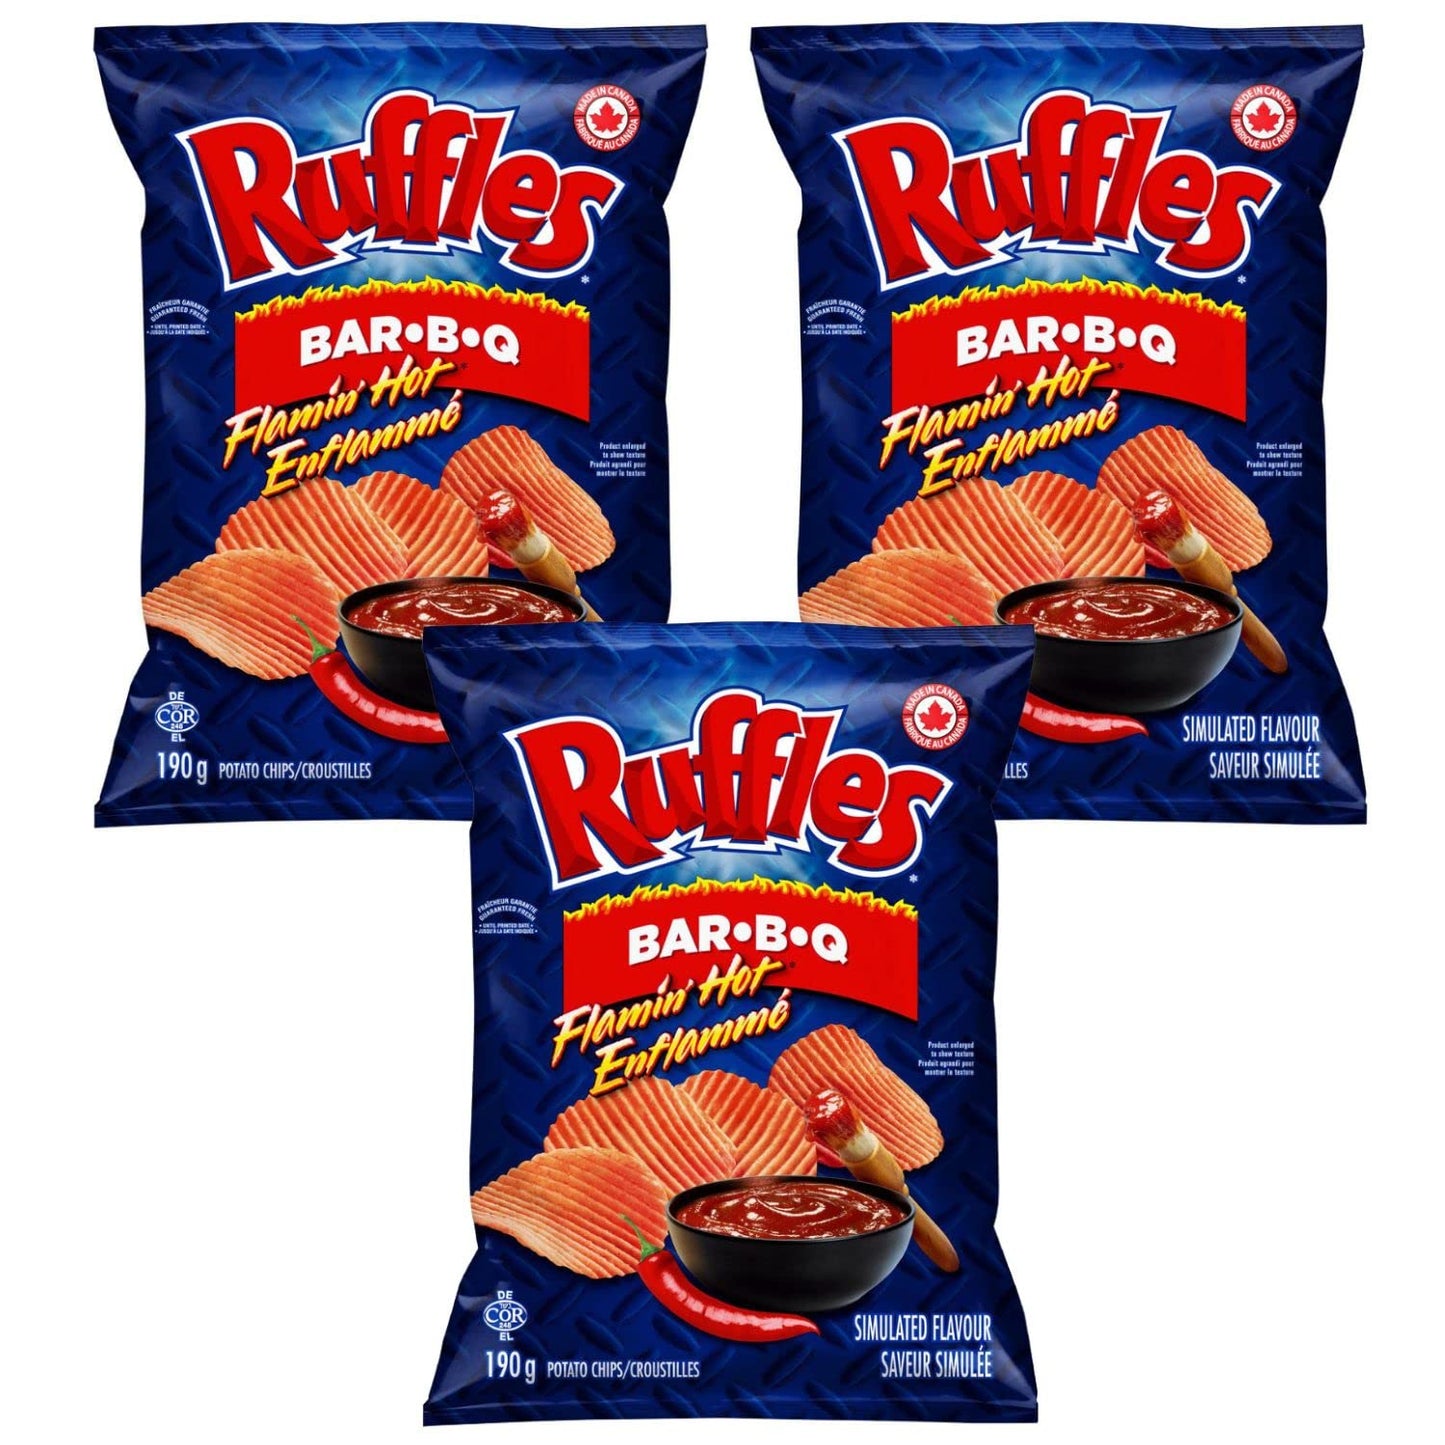 Ruffles Flamin' Hot Bar-B-Q Potato Chips pack of 3